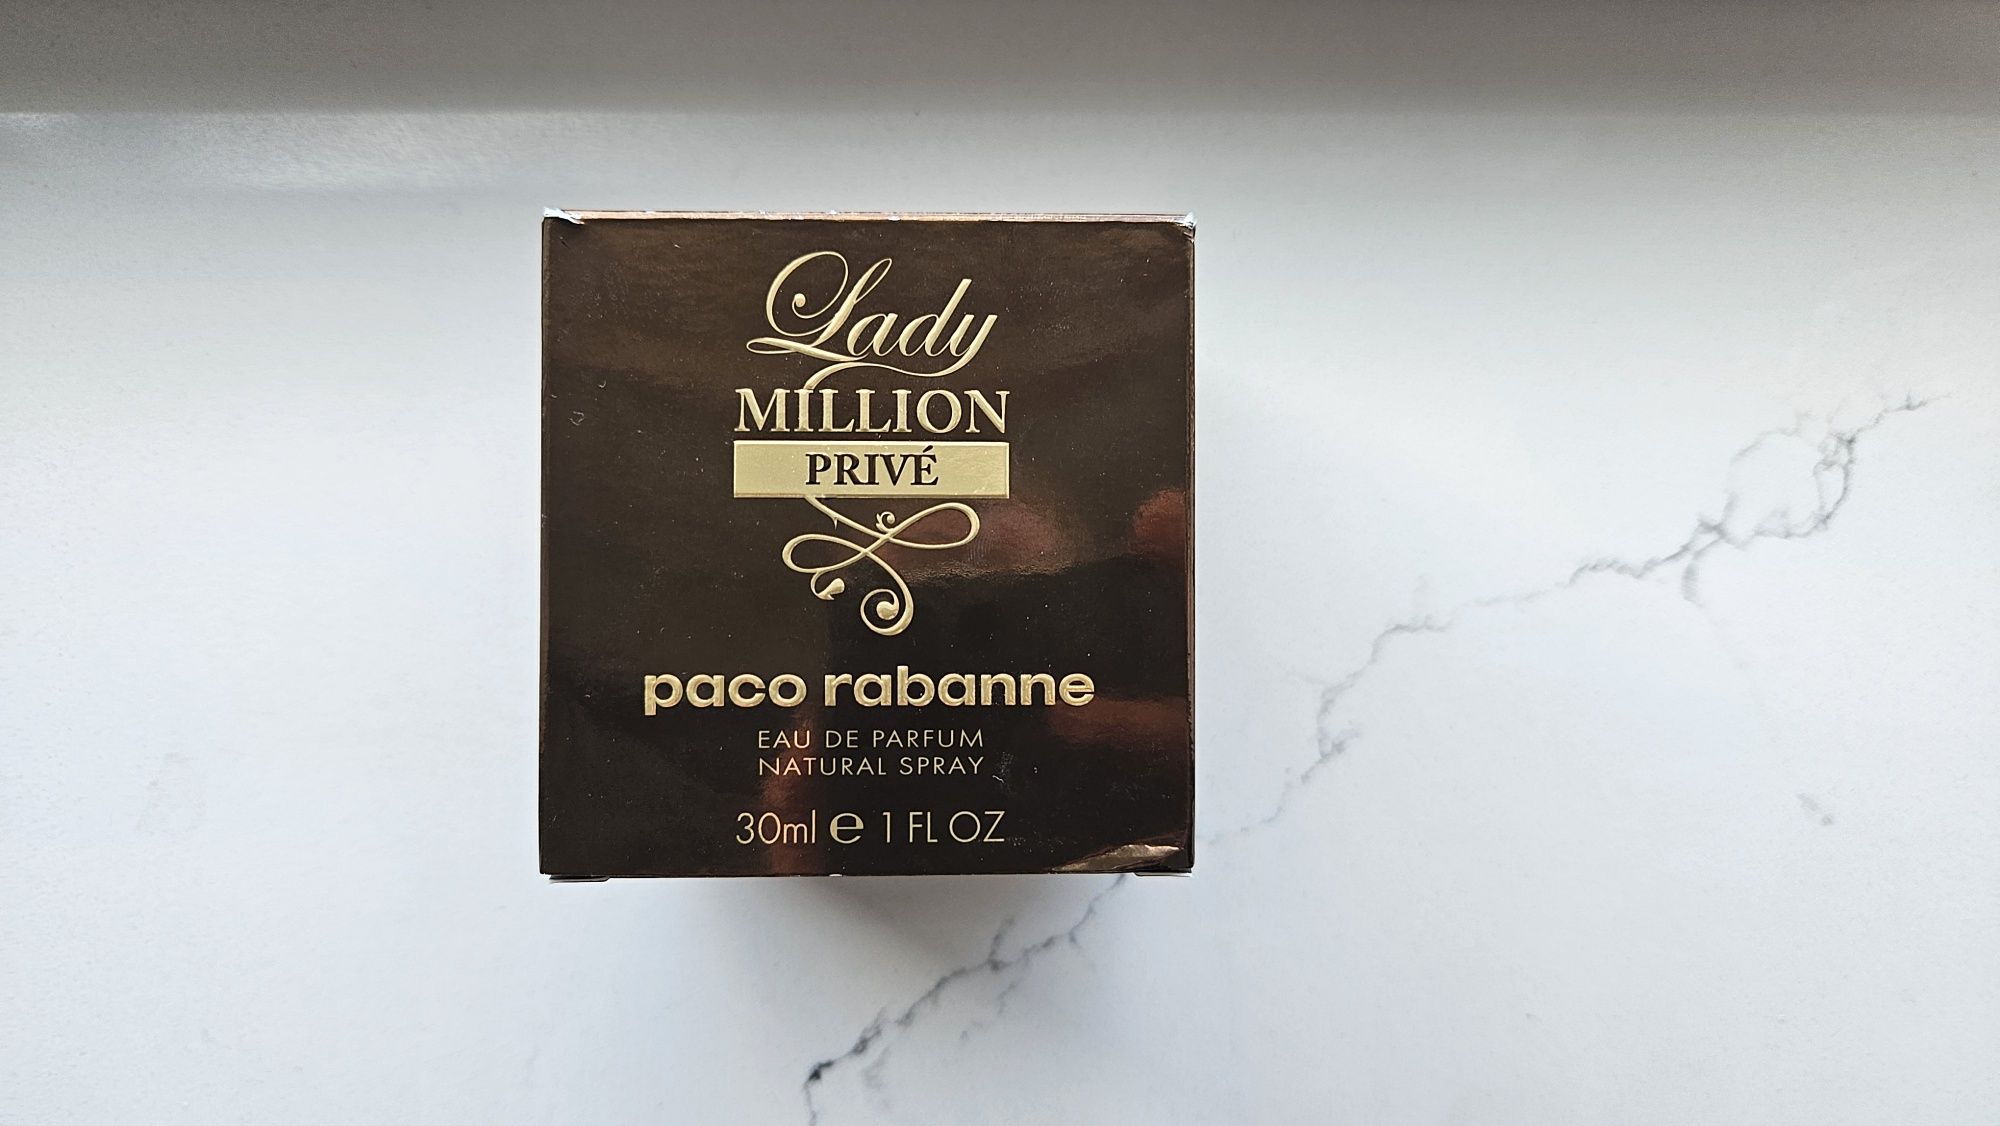 Paco Rabanne, Lady Million Prive 30ml